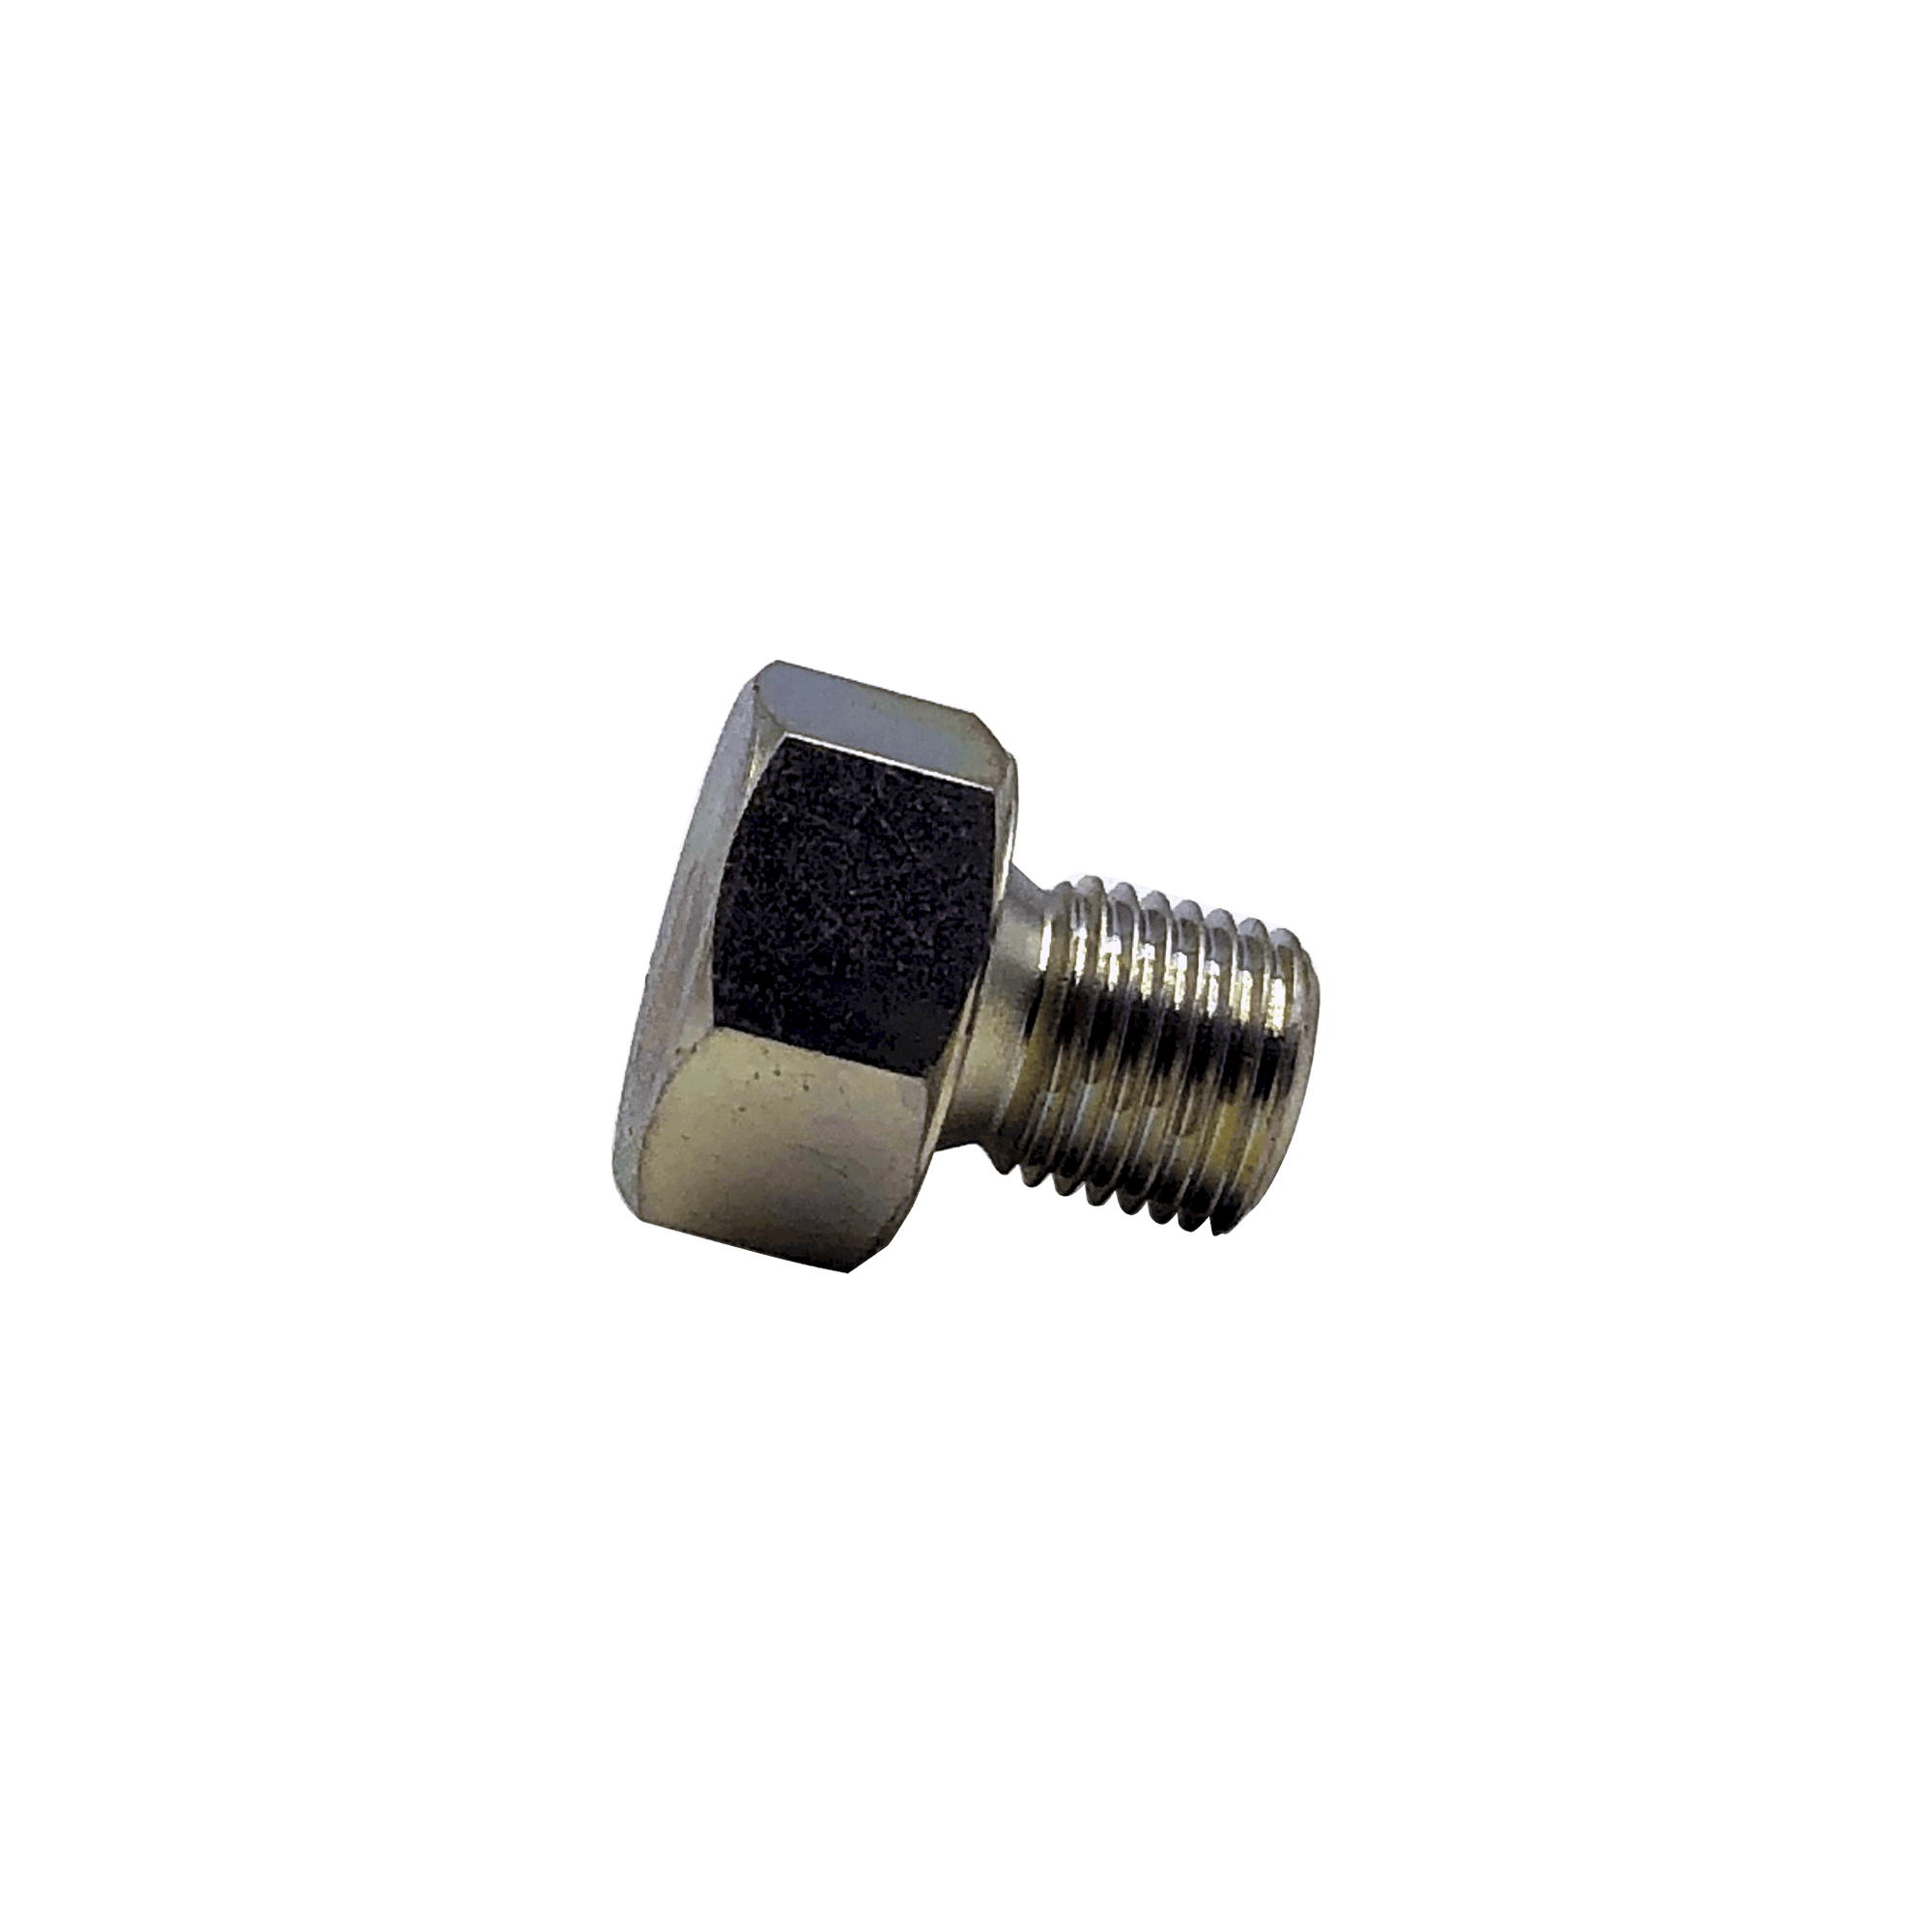 Kubota Small drain bolt for a PowerTech Mobile Generators